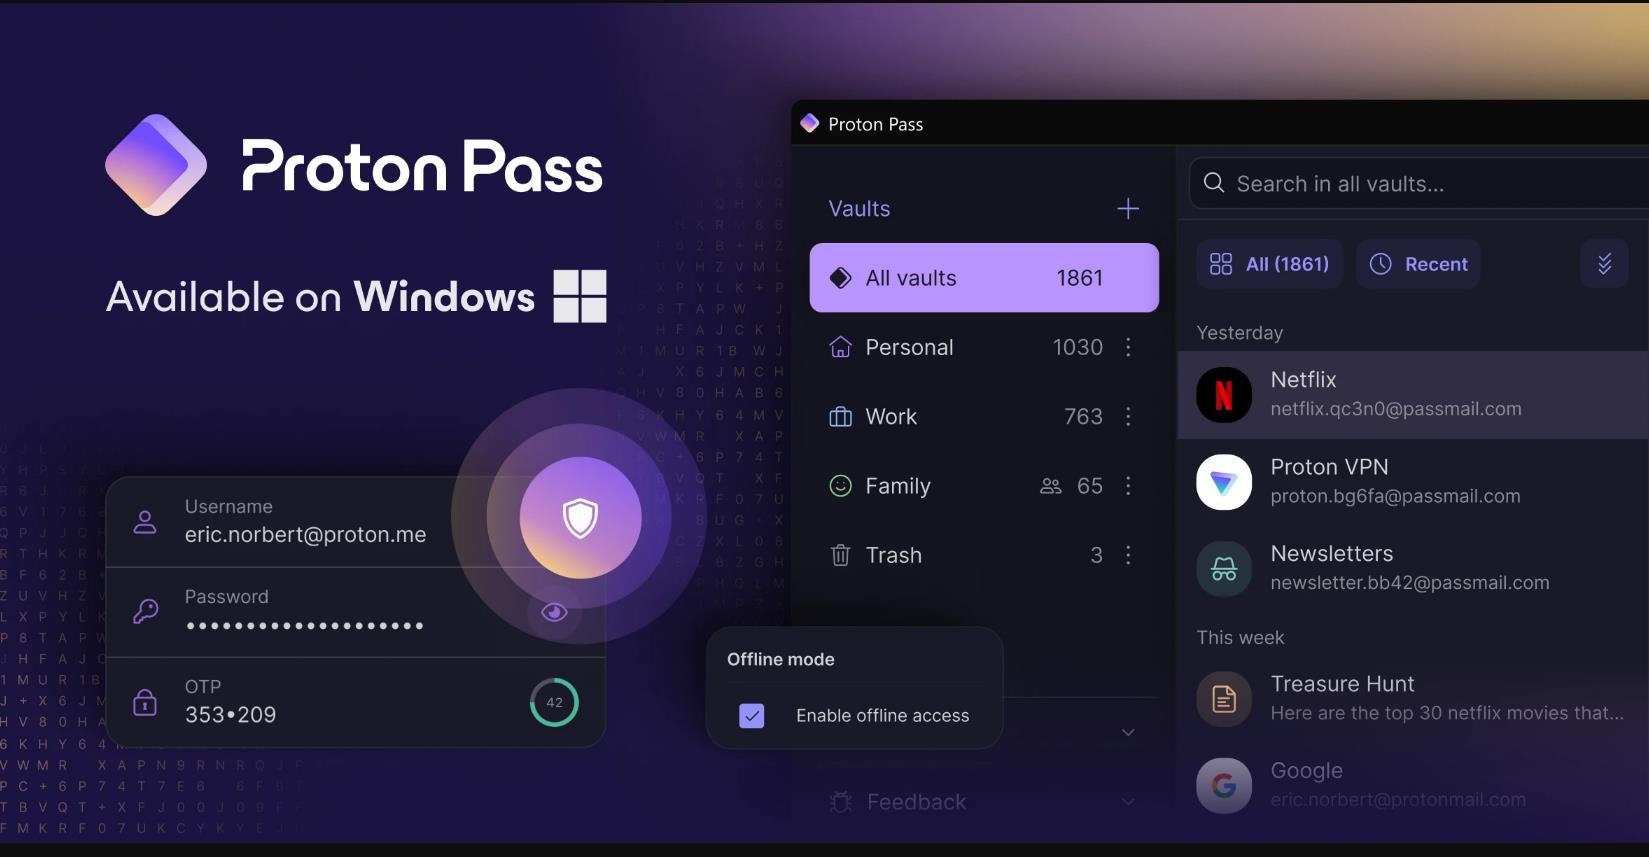 Proton Pass Windows dashboard.